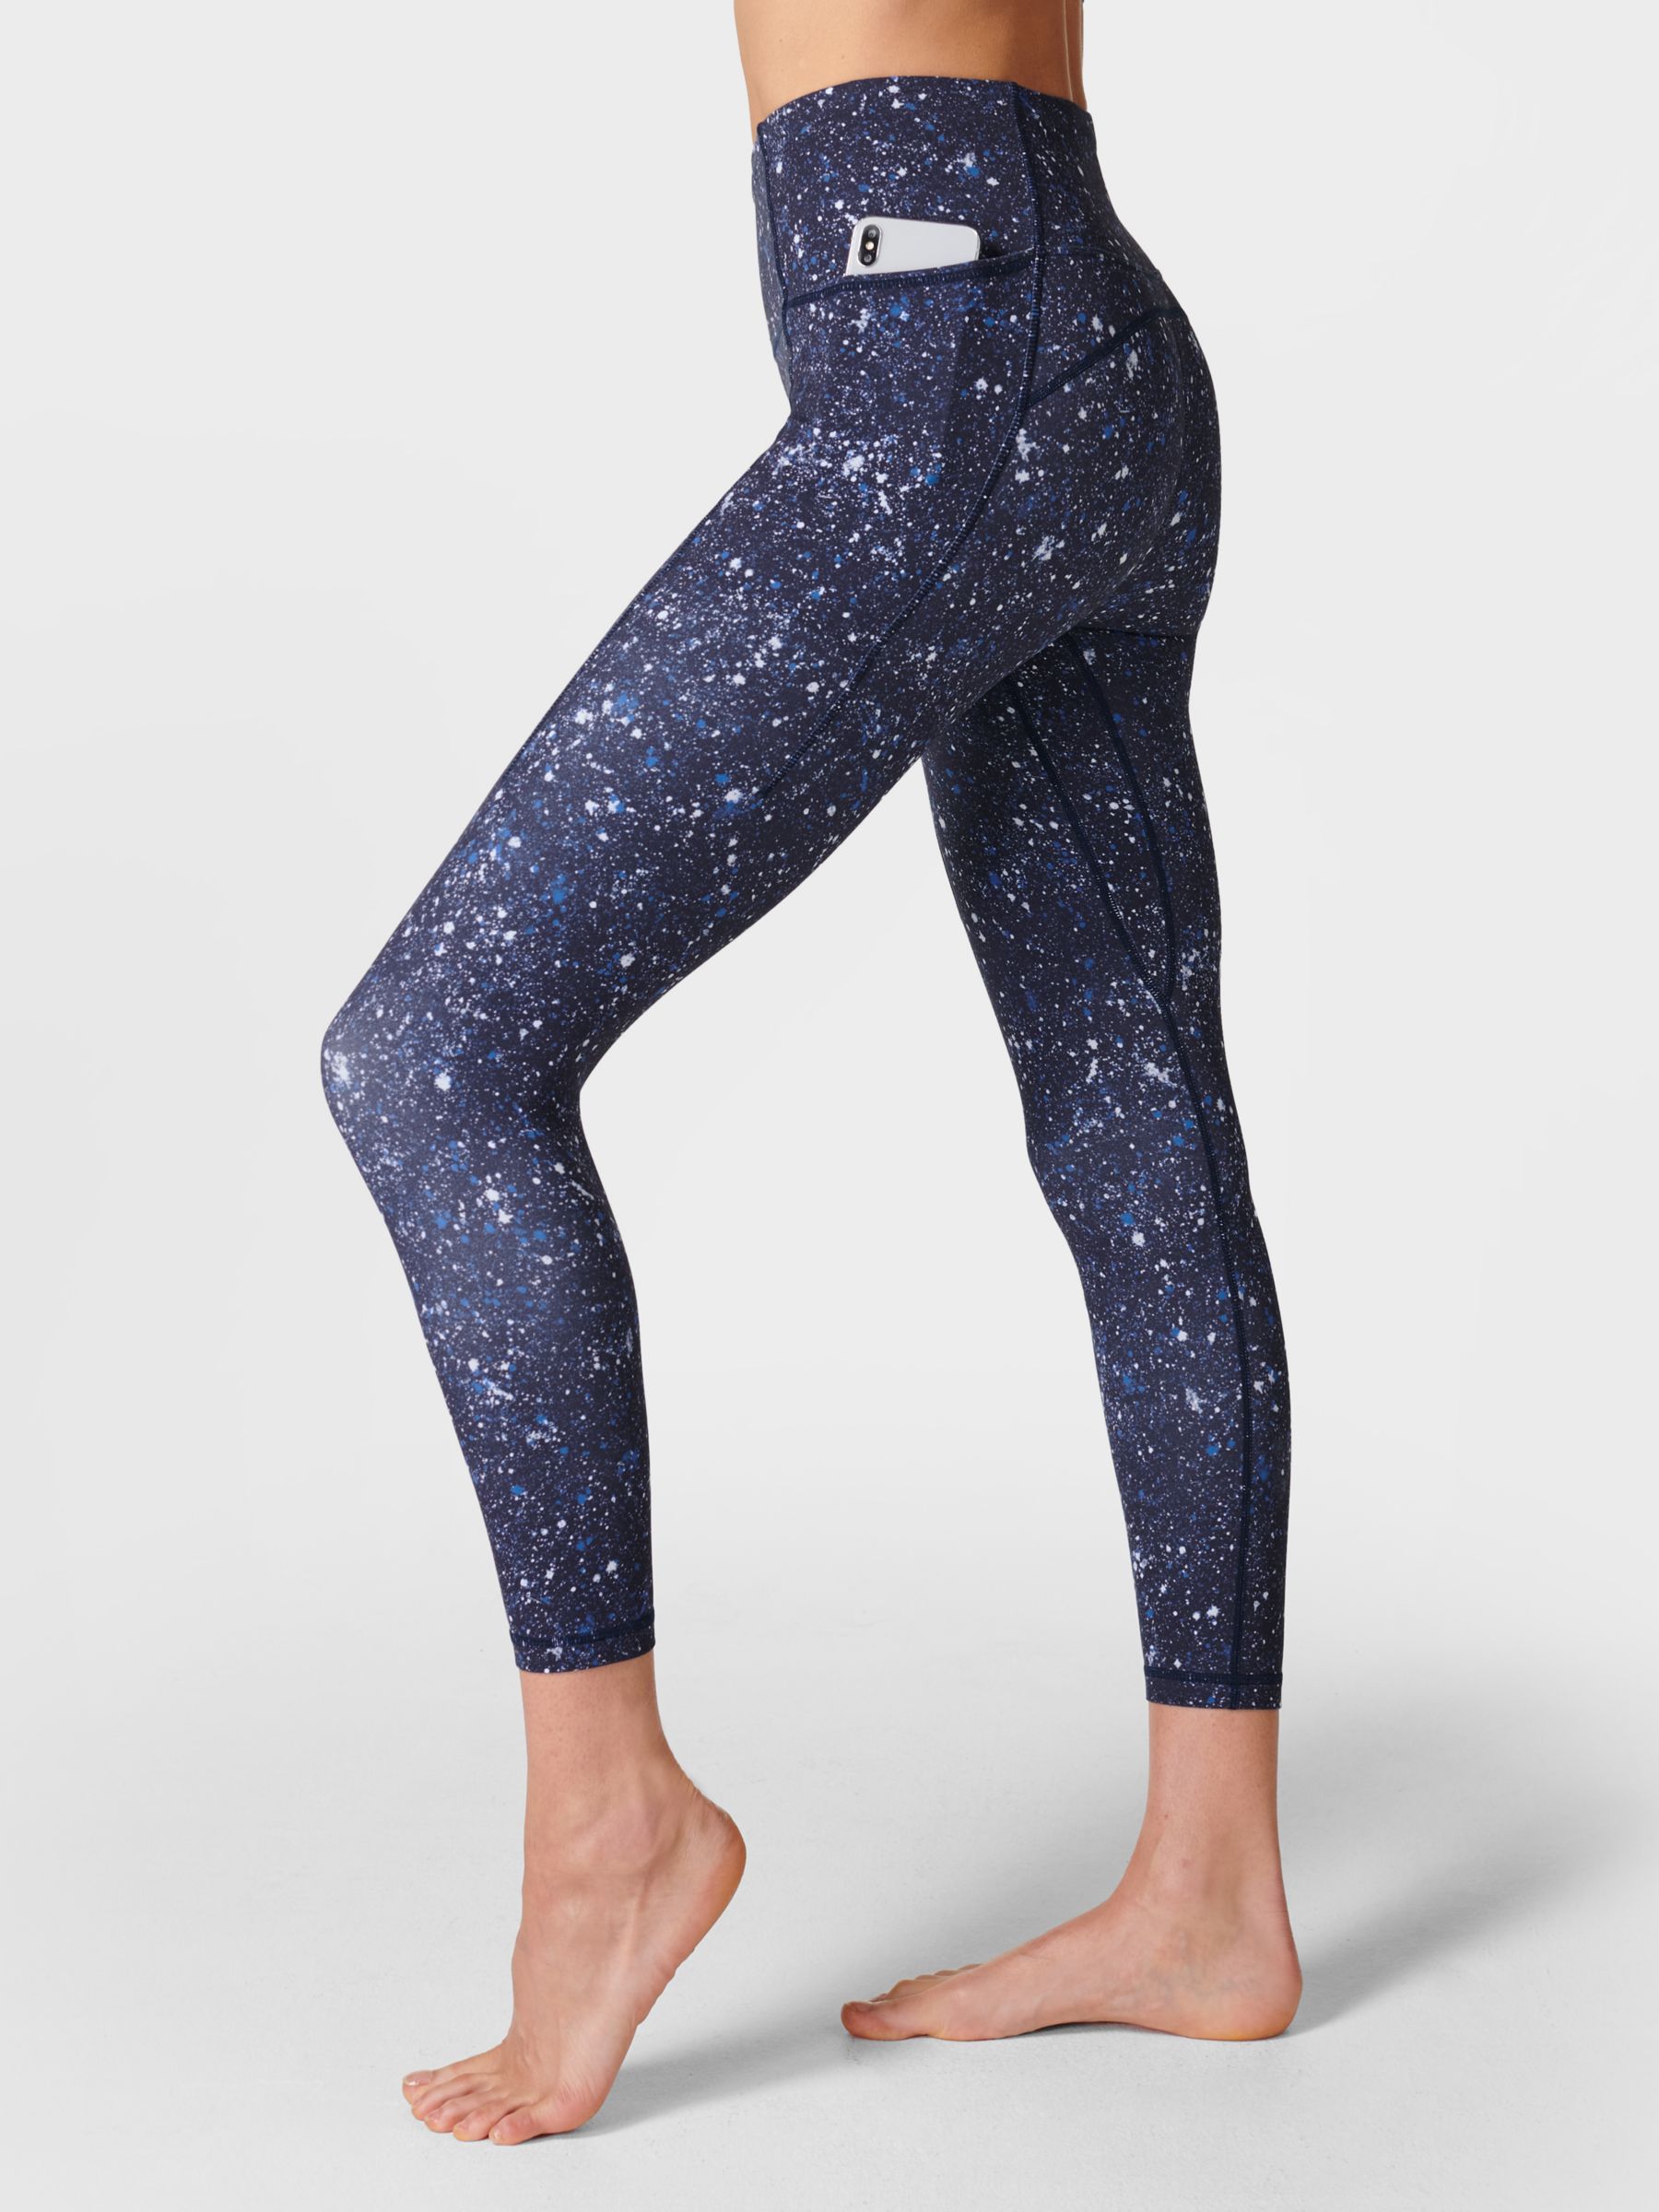 Sweaty Betty Super Soft 7/8 Yoga Leggings, Blue Multi Speckle at